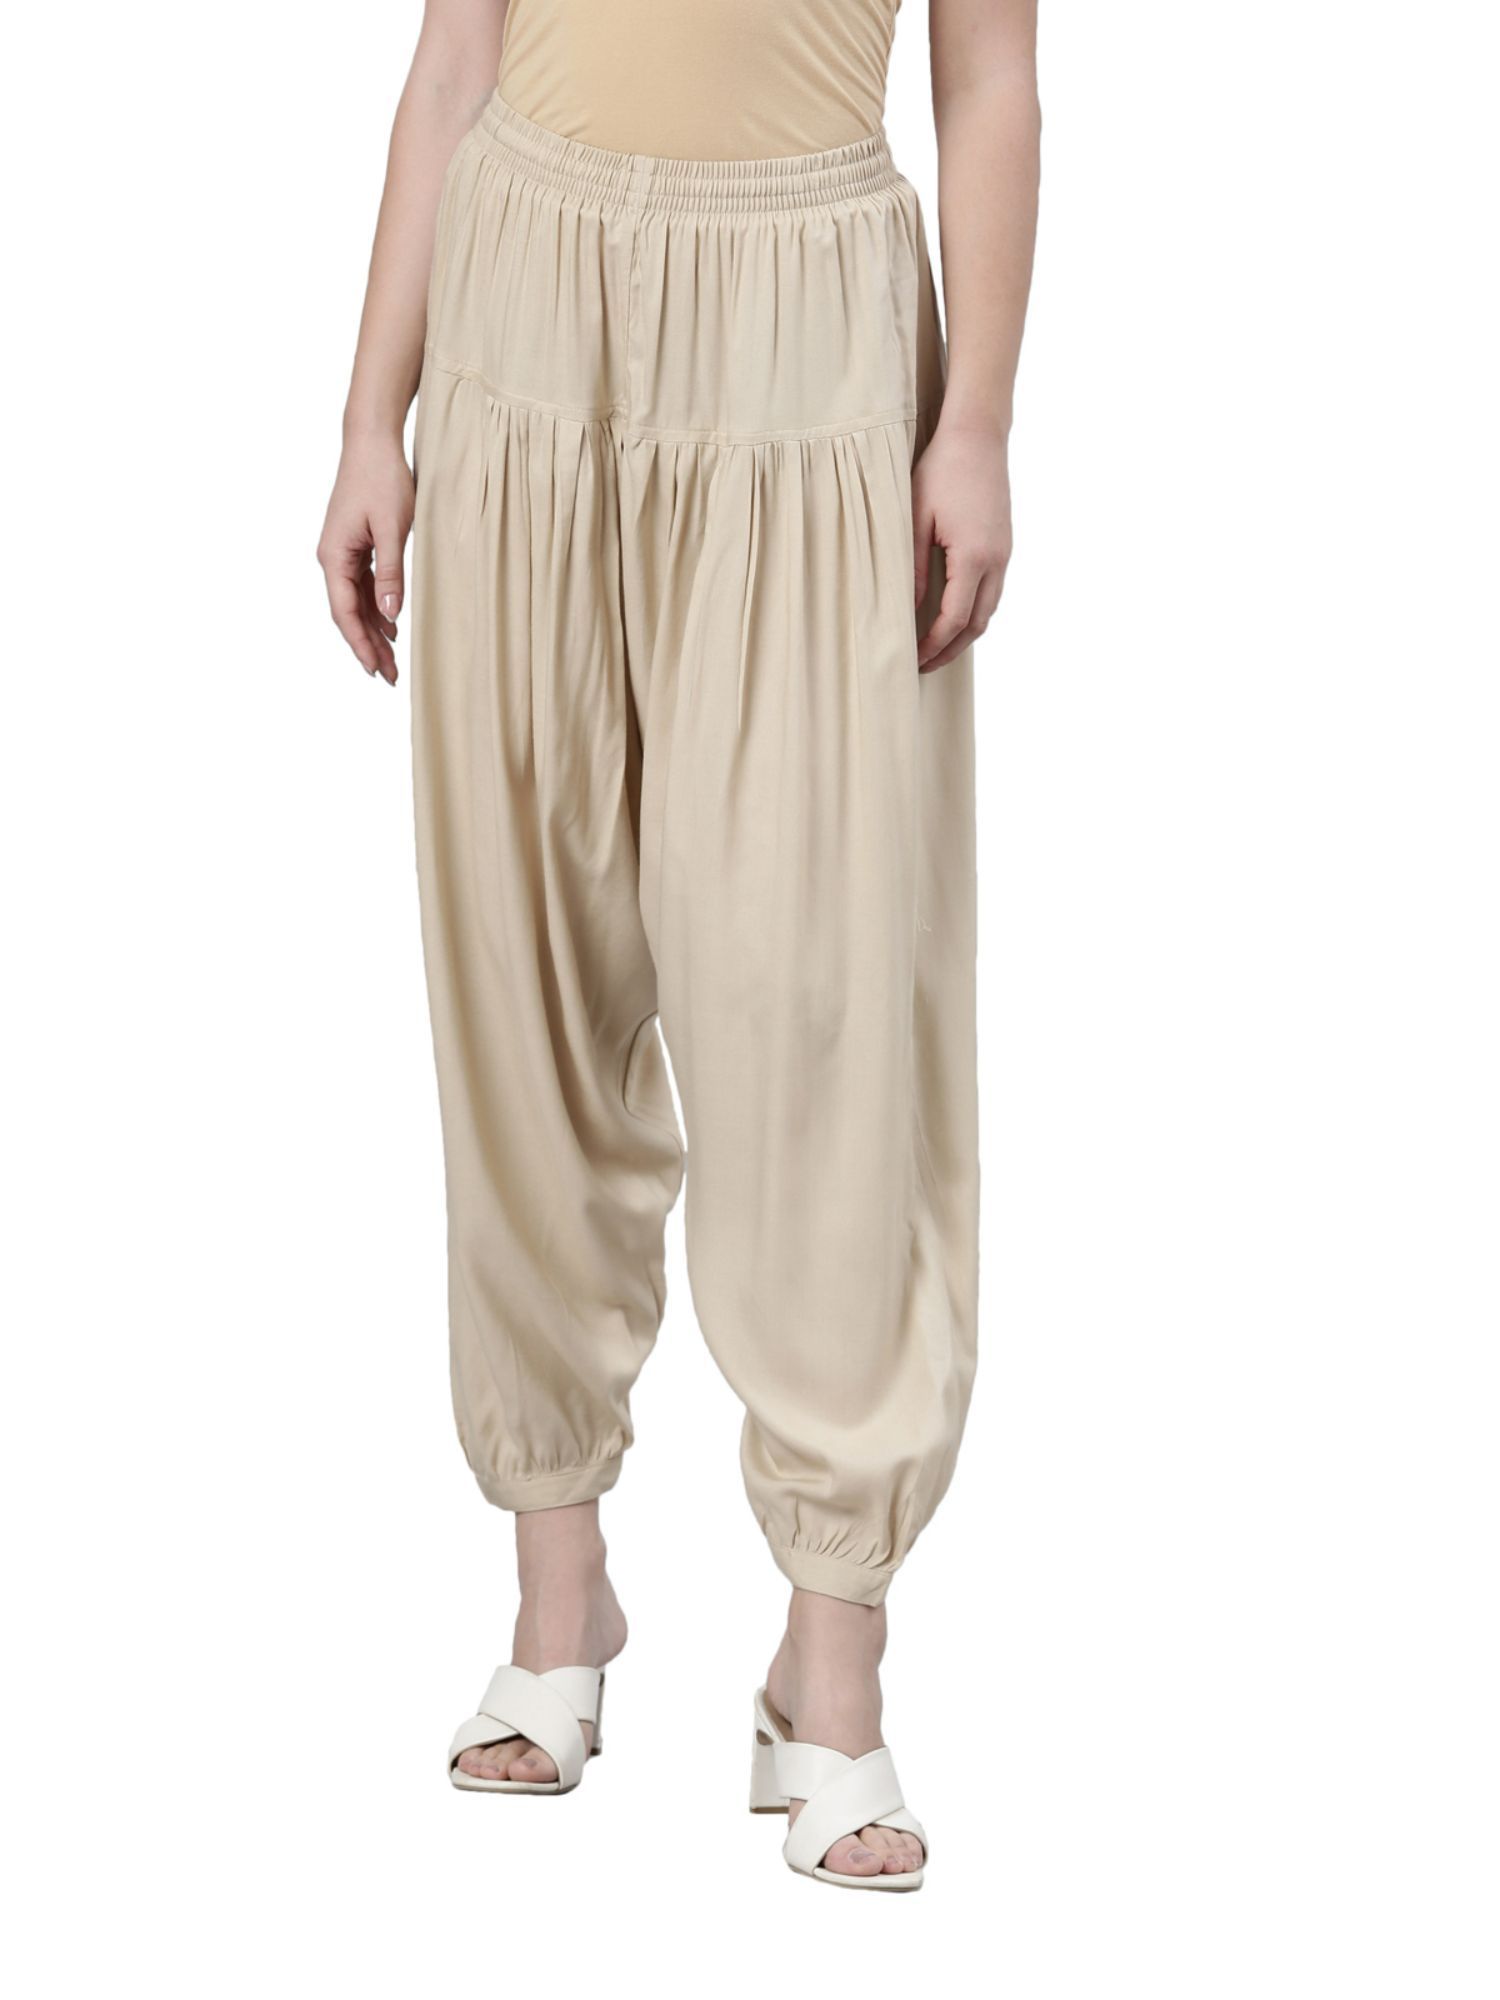 Buy PURPURA INDIA Women's Regular Fit Harem Pants (PBT0602_Beige_Free Size)  at Amazon.in